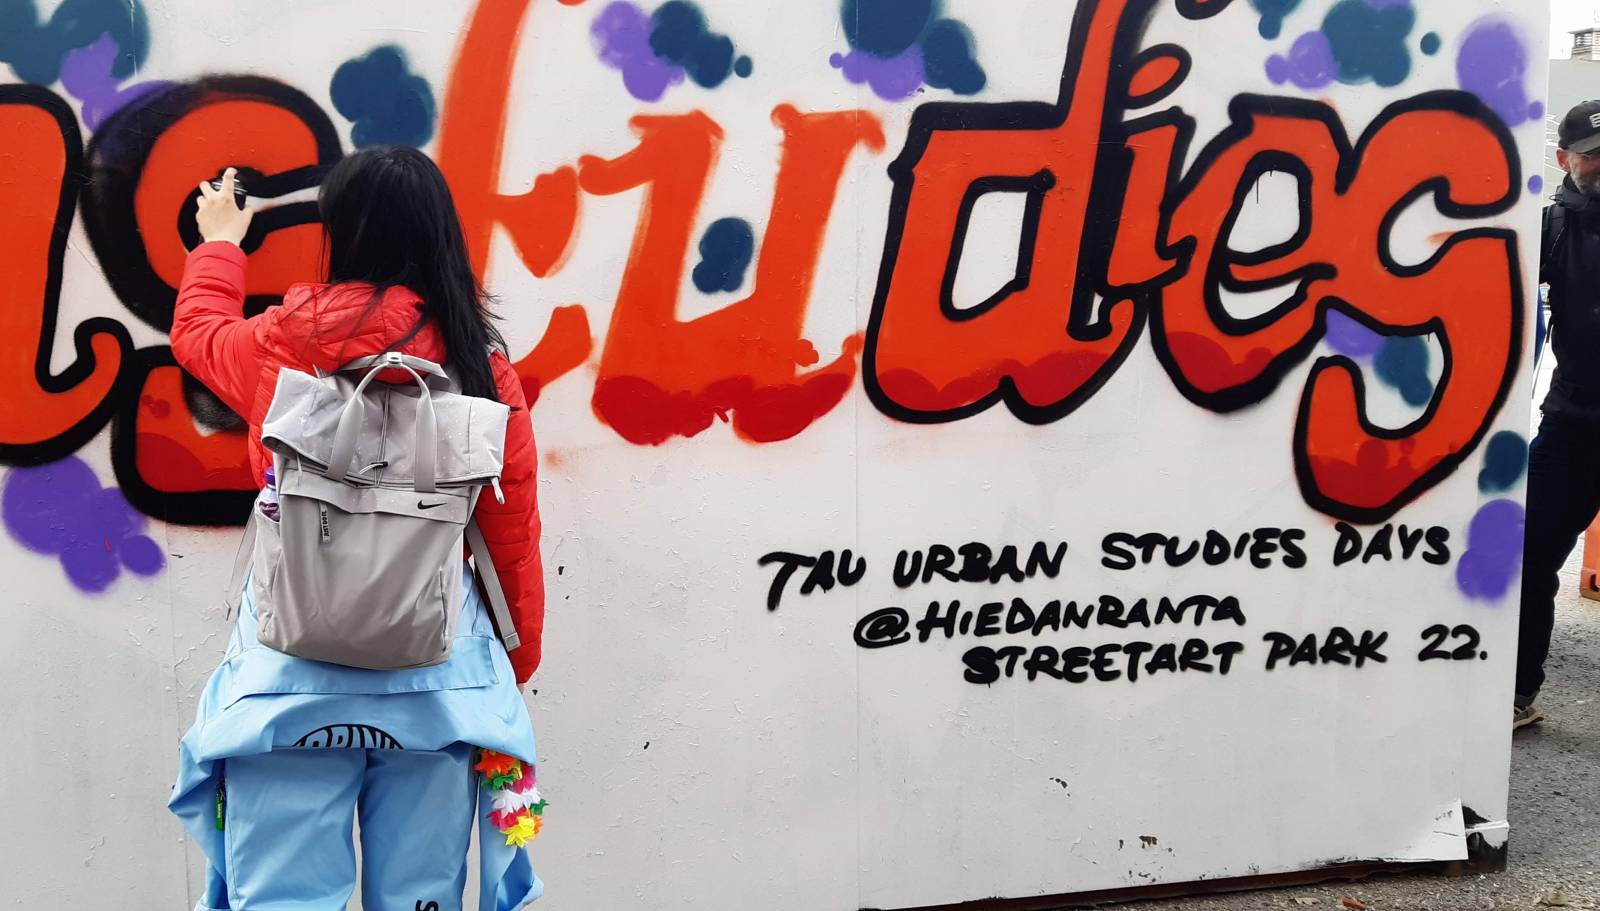 Graffiti: Urban Studies Conference 2022